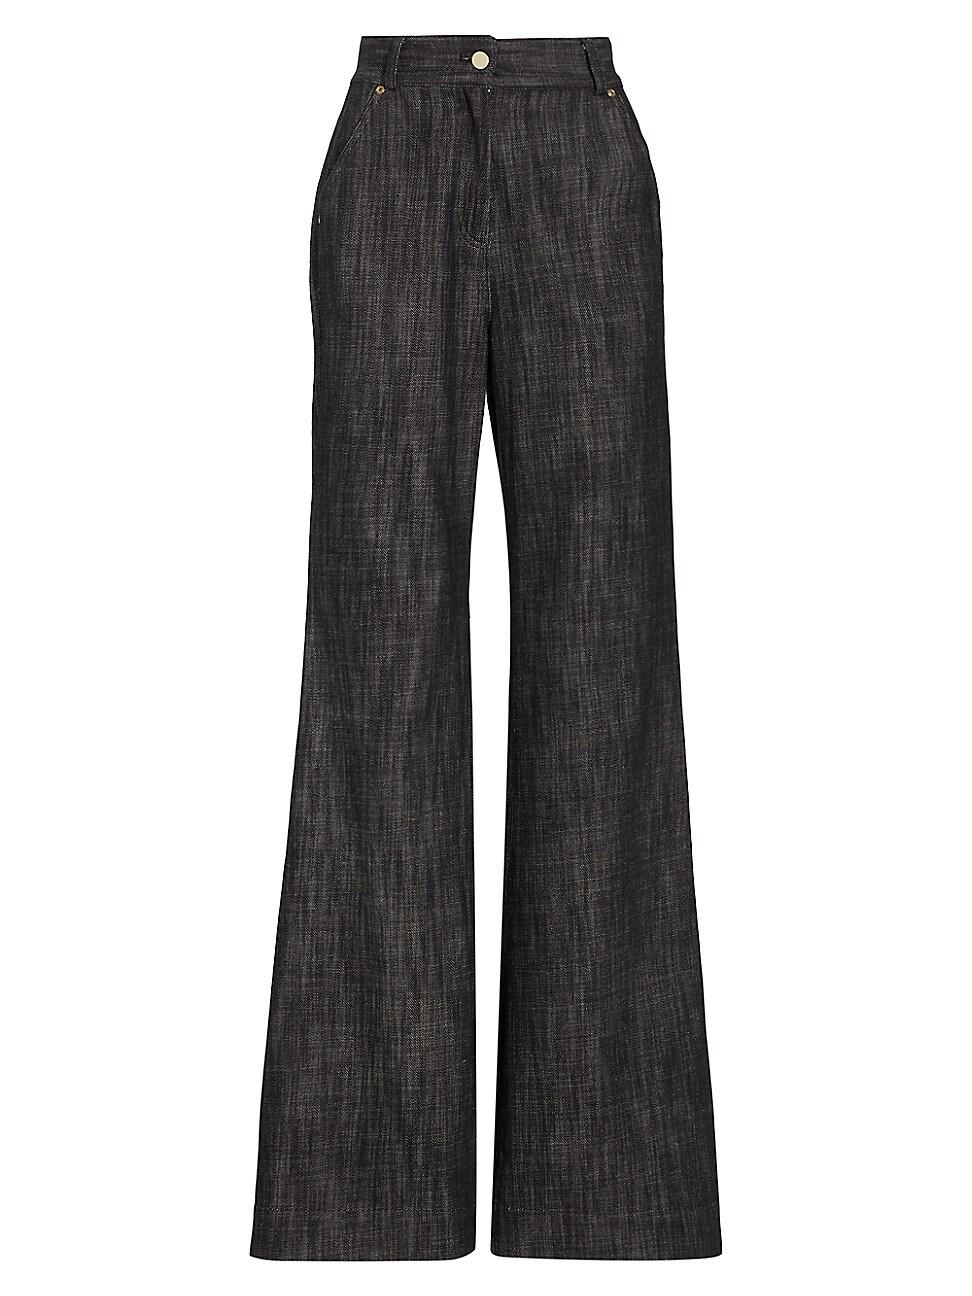 Sergio Hudson Denim High-rise Flare Trousers in Black | Lyst